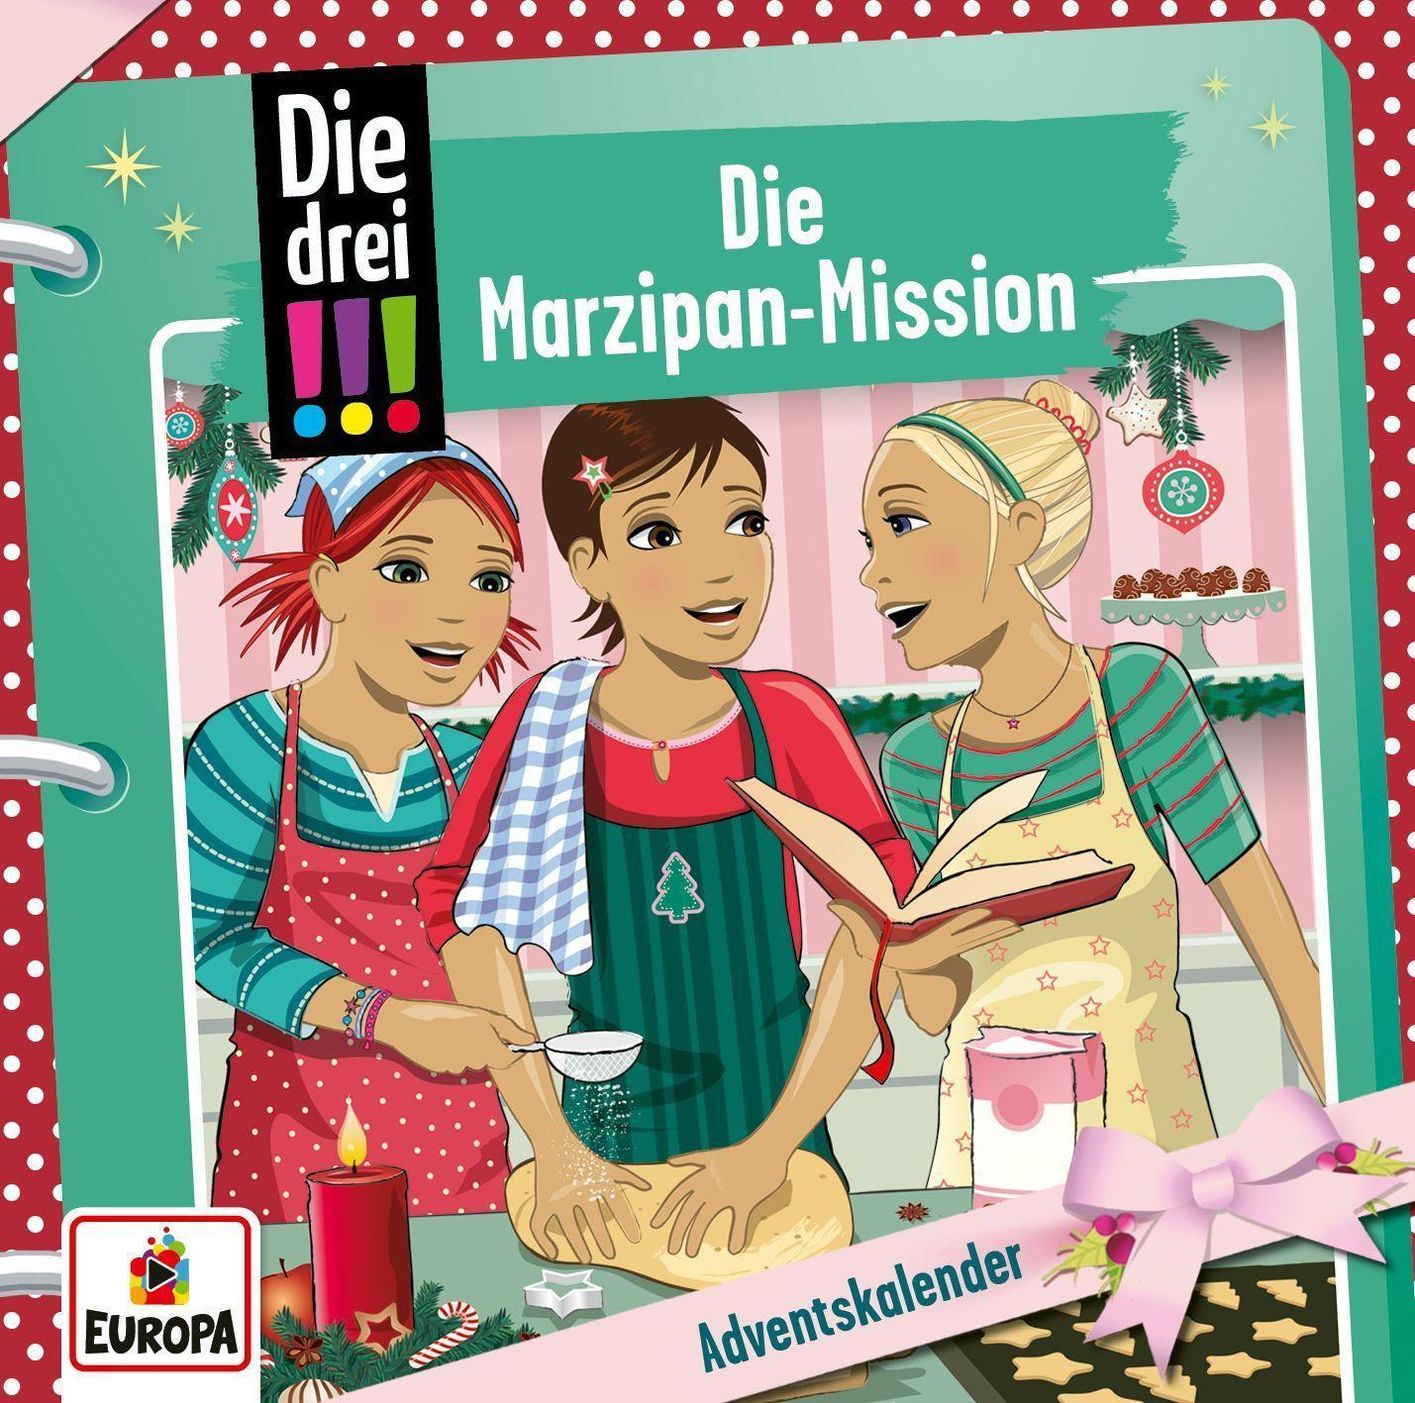 Die drei !!! - Adventskalender - Die Marzipan-Mission 2 CDs Hörbuch